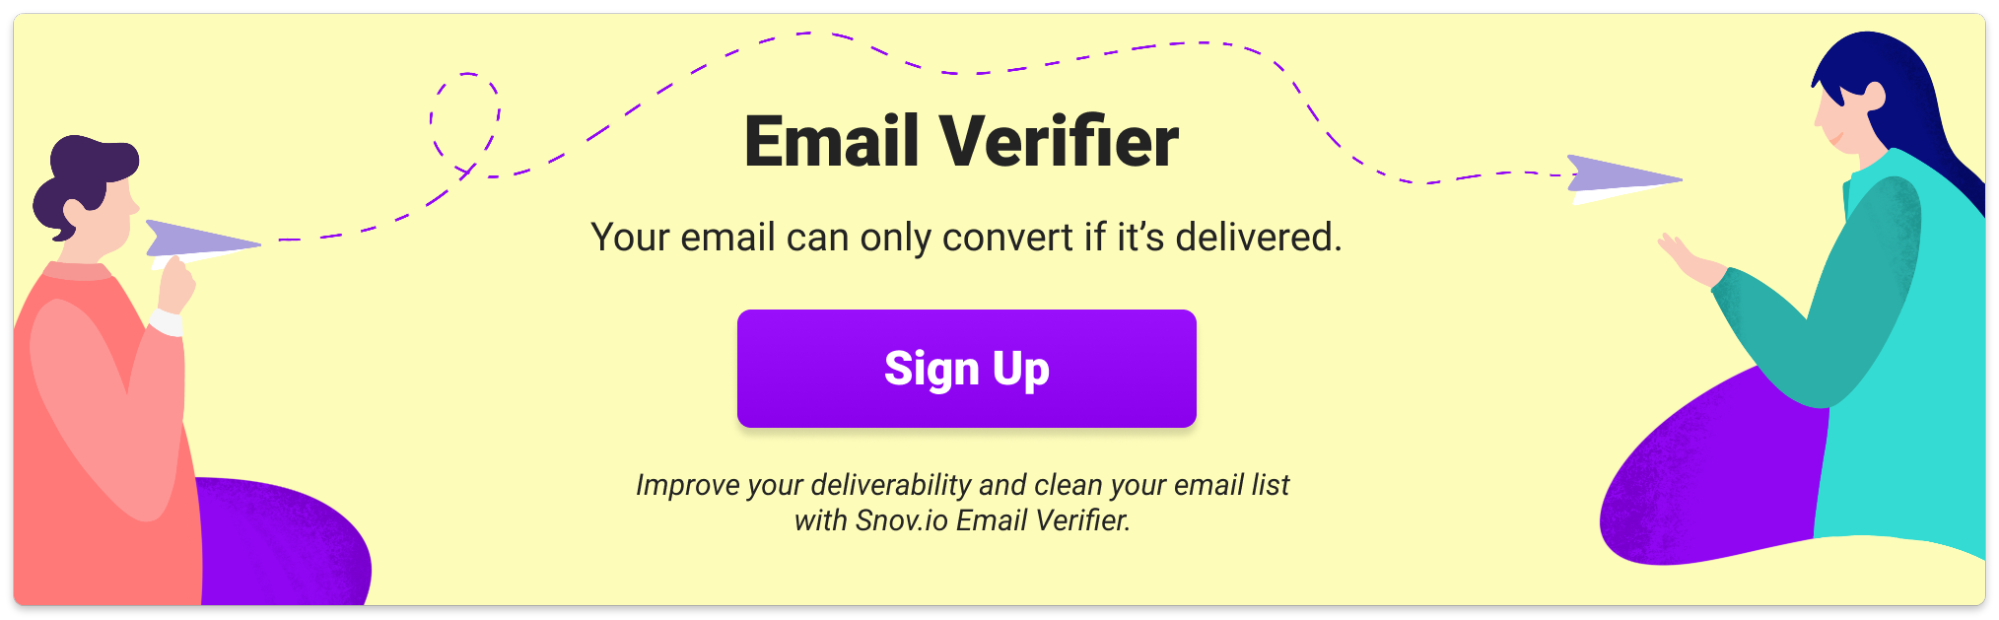 Snov.io email verifier banner